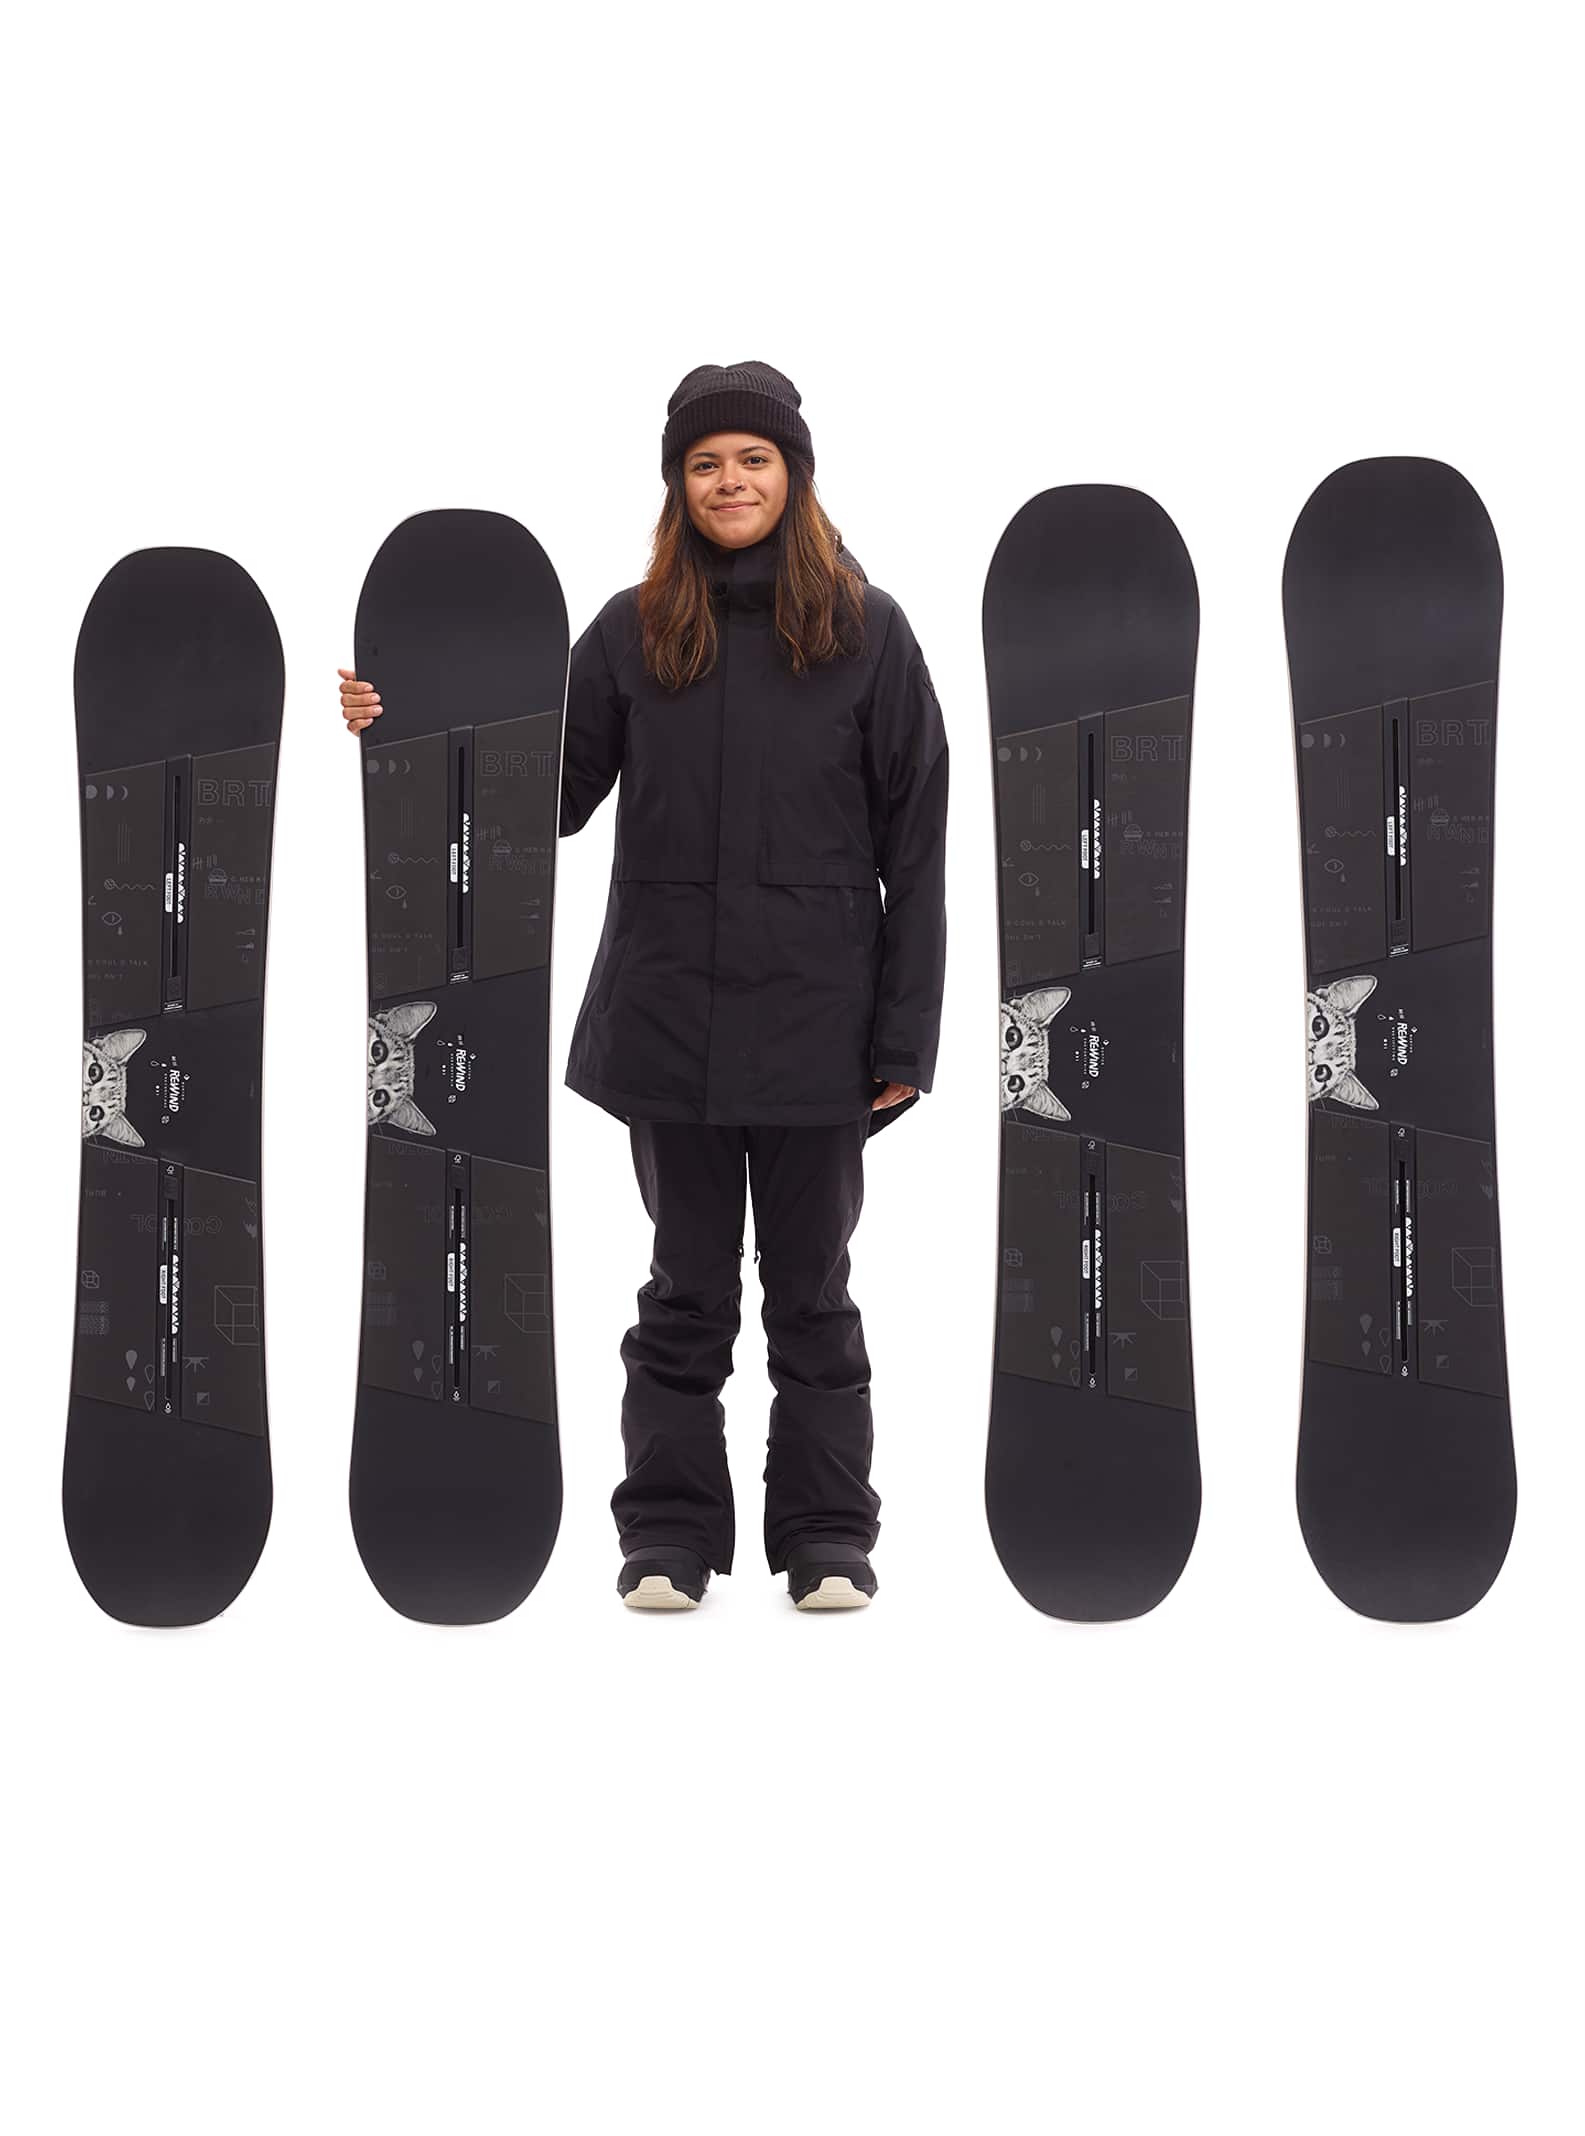 Women's Burton Rewind Snowboard | Burton.com Winter 2019 US